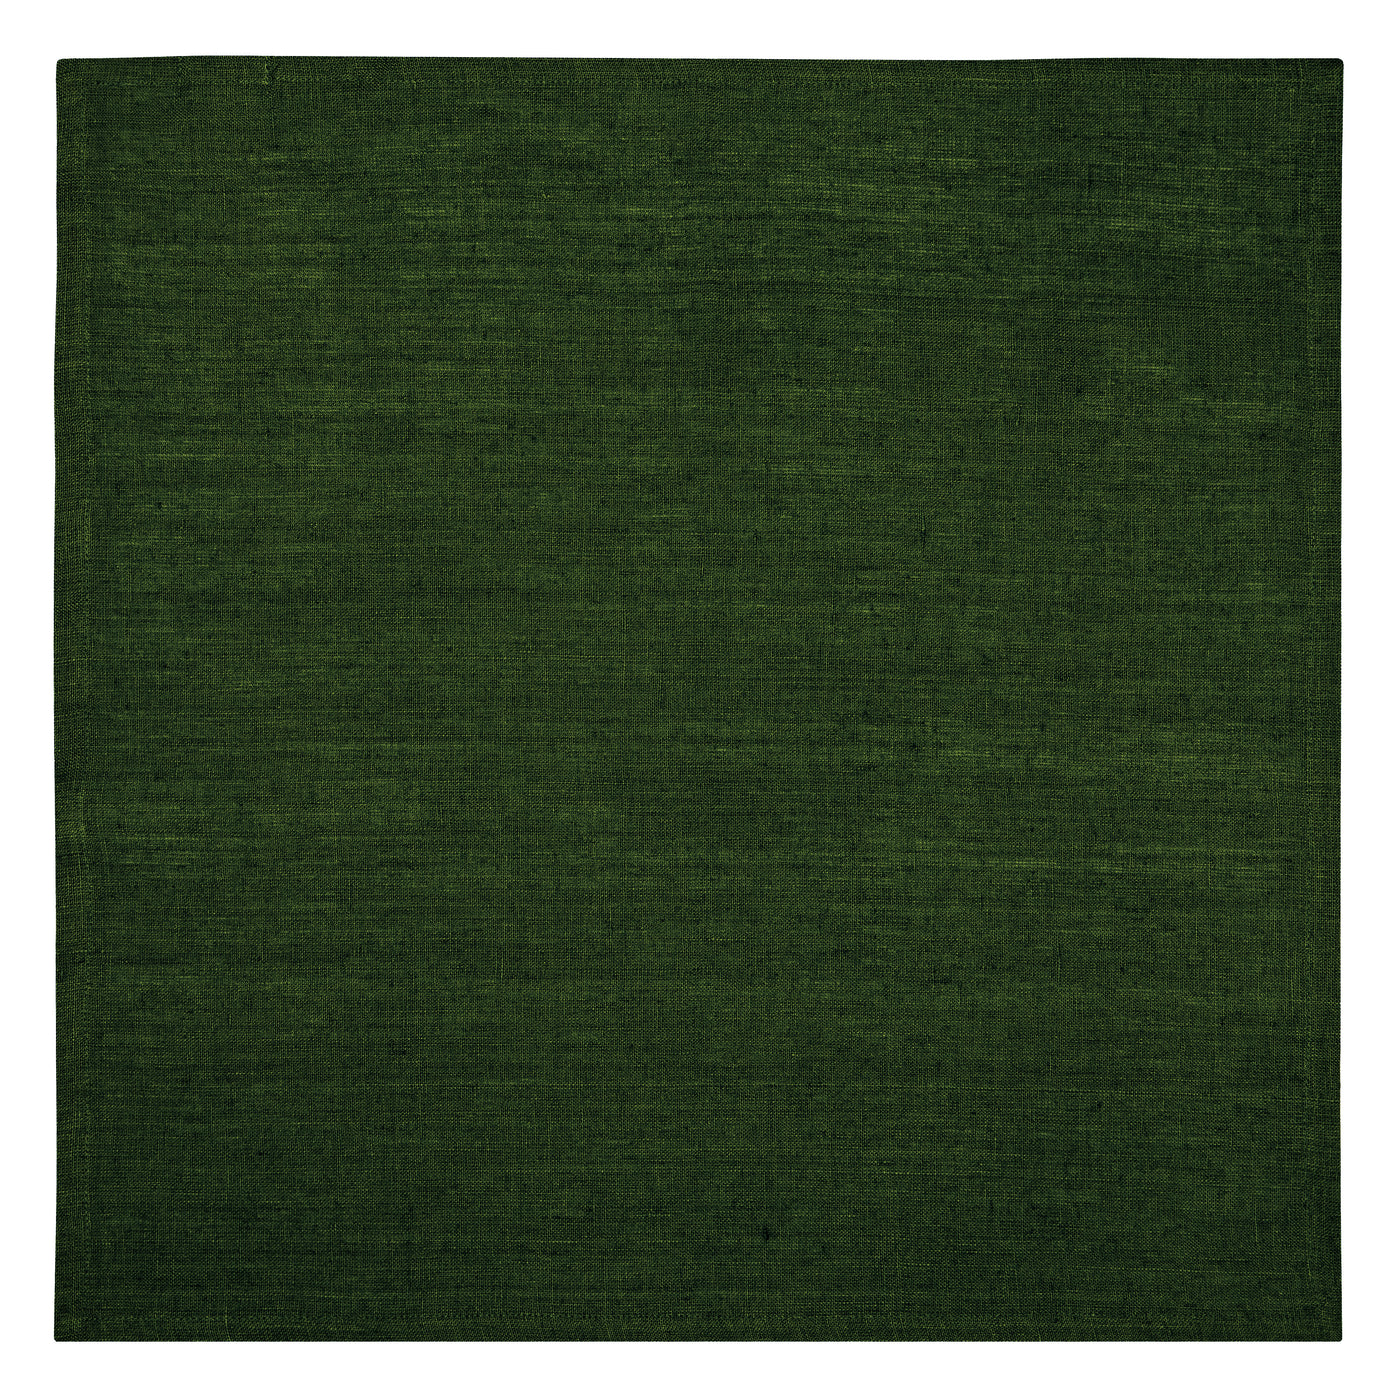 Palma Handwoven Linen Forest Green Napkins 20x20 - Set of 4